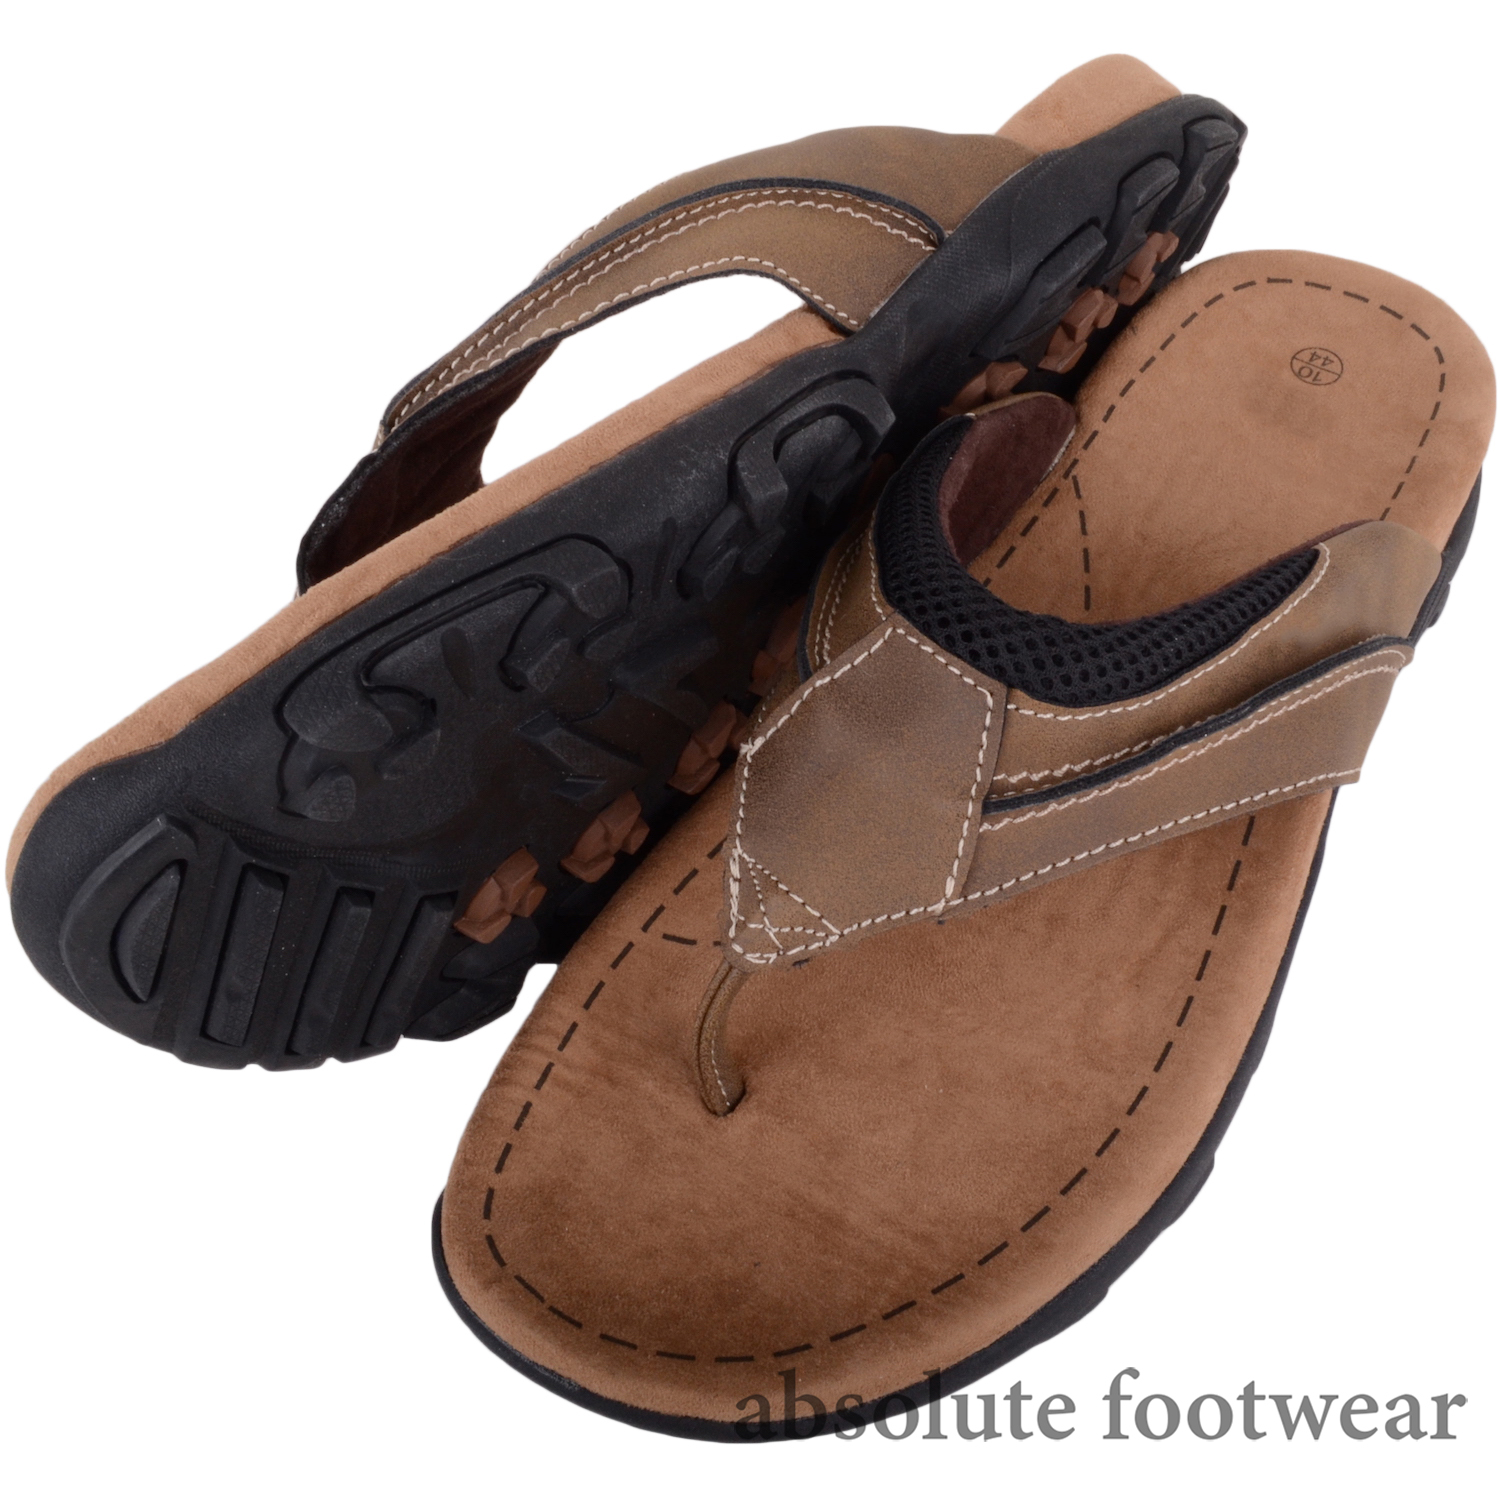 Shoes Gents Slip On Summer Beach Sandals Mens Flip Flops Holiday